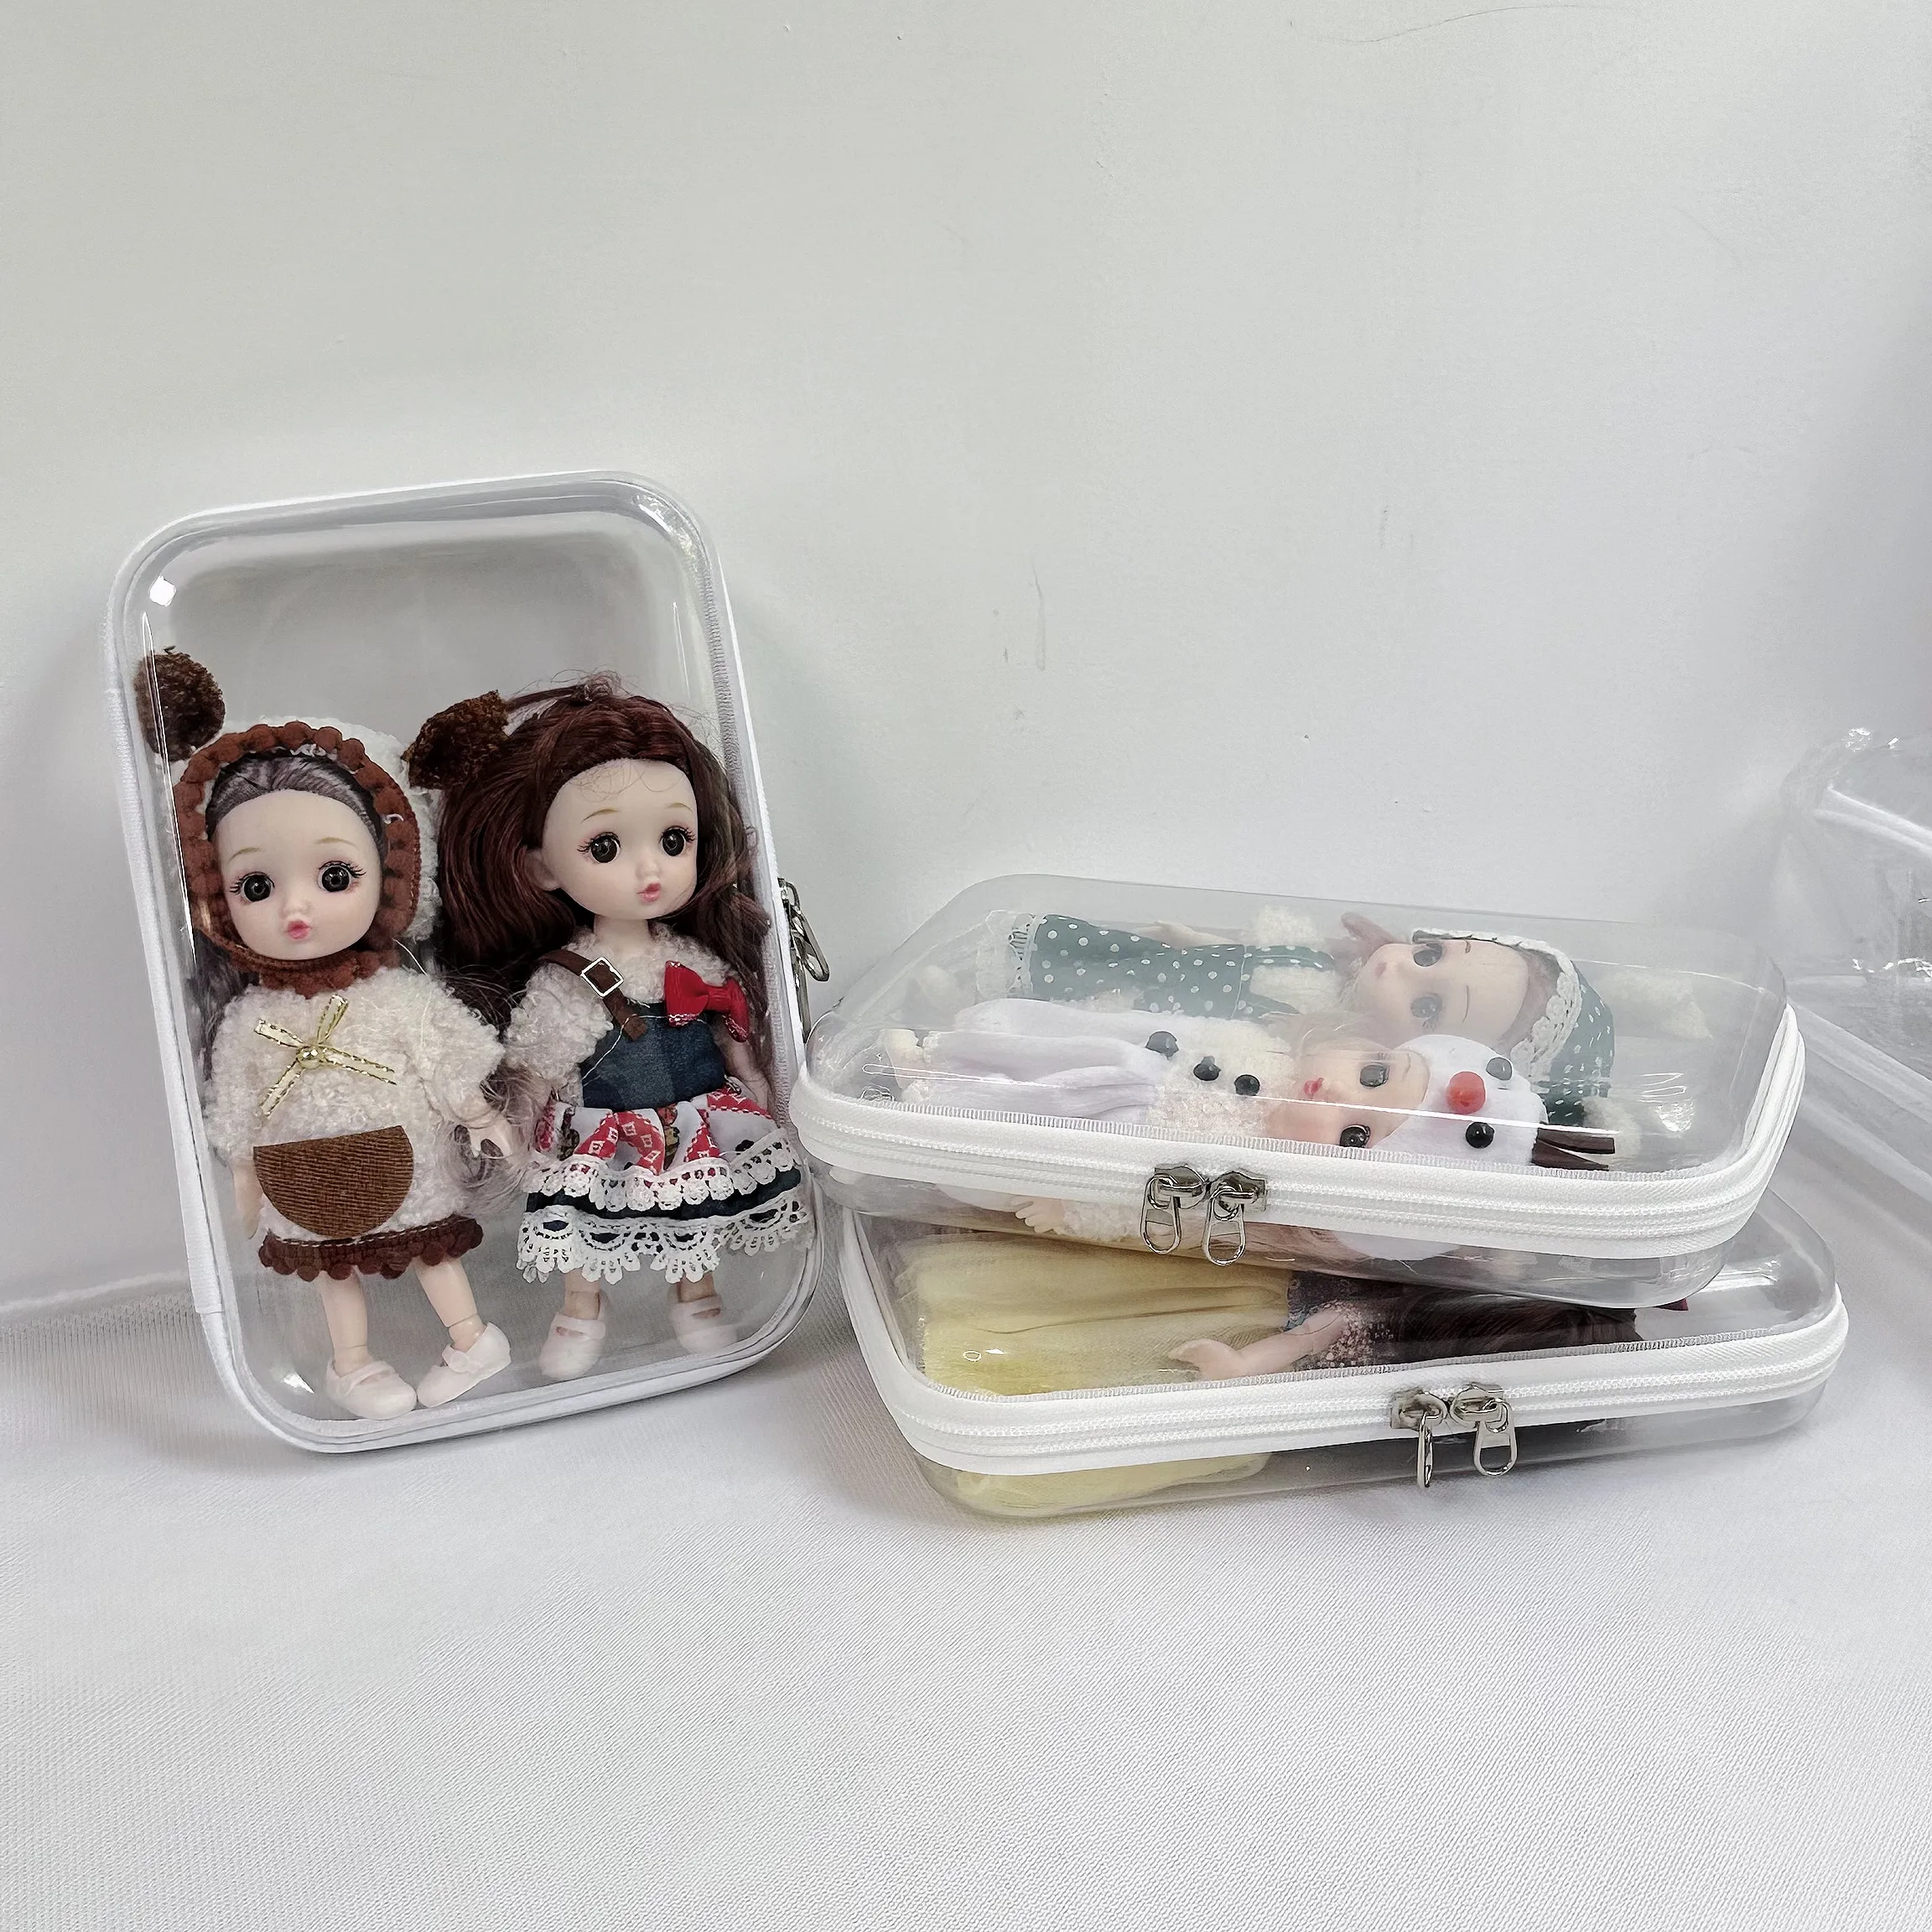 POSH DREAMS Craft supplies storage box waterproof toy storage box for organize toy doll container bins